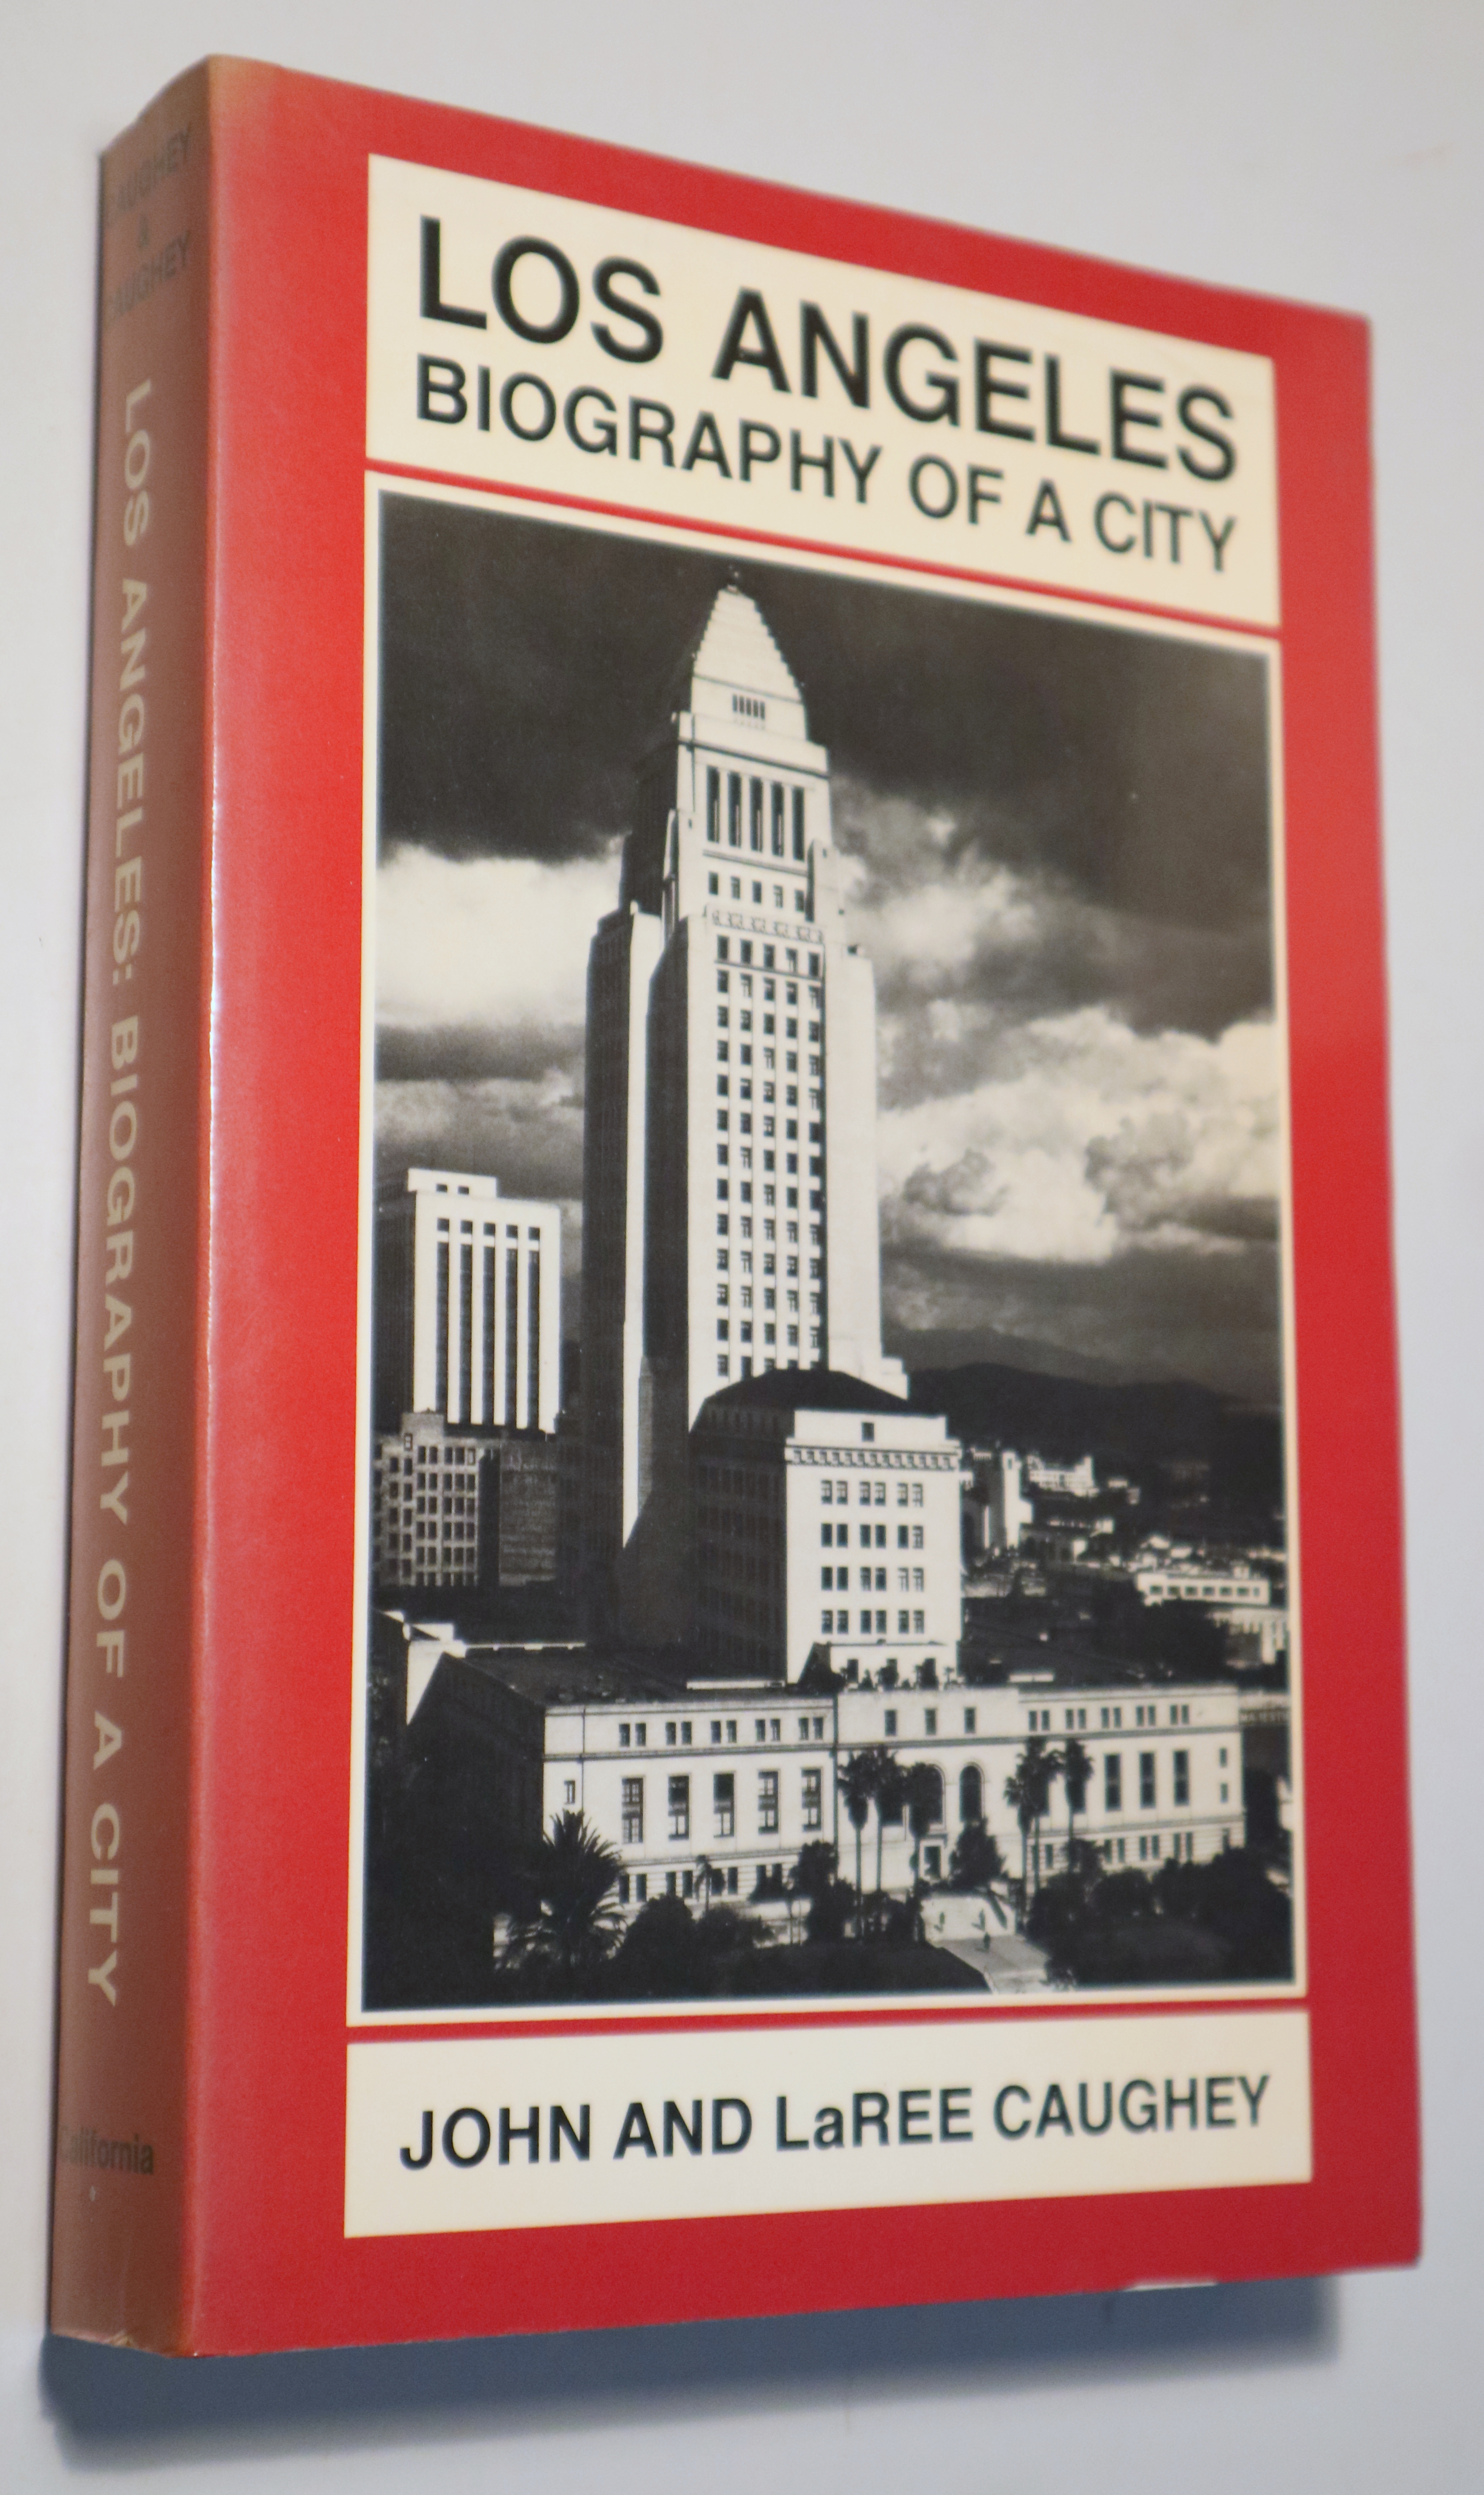 LOS ÁNGELES. BIOGRAPHY OF A CITY - Los Angeles 1977